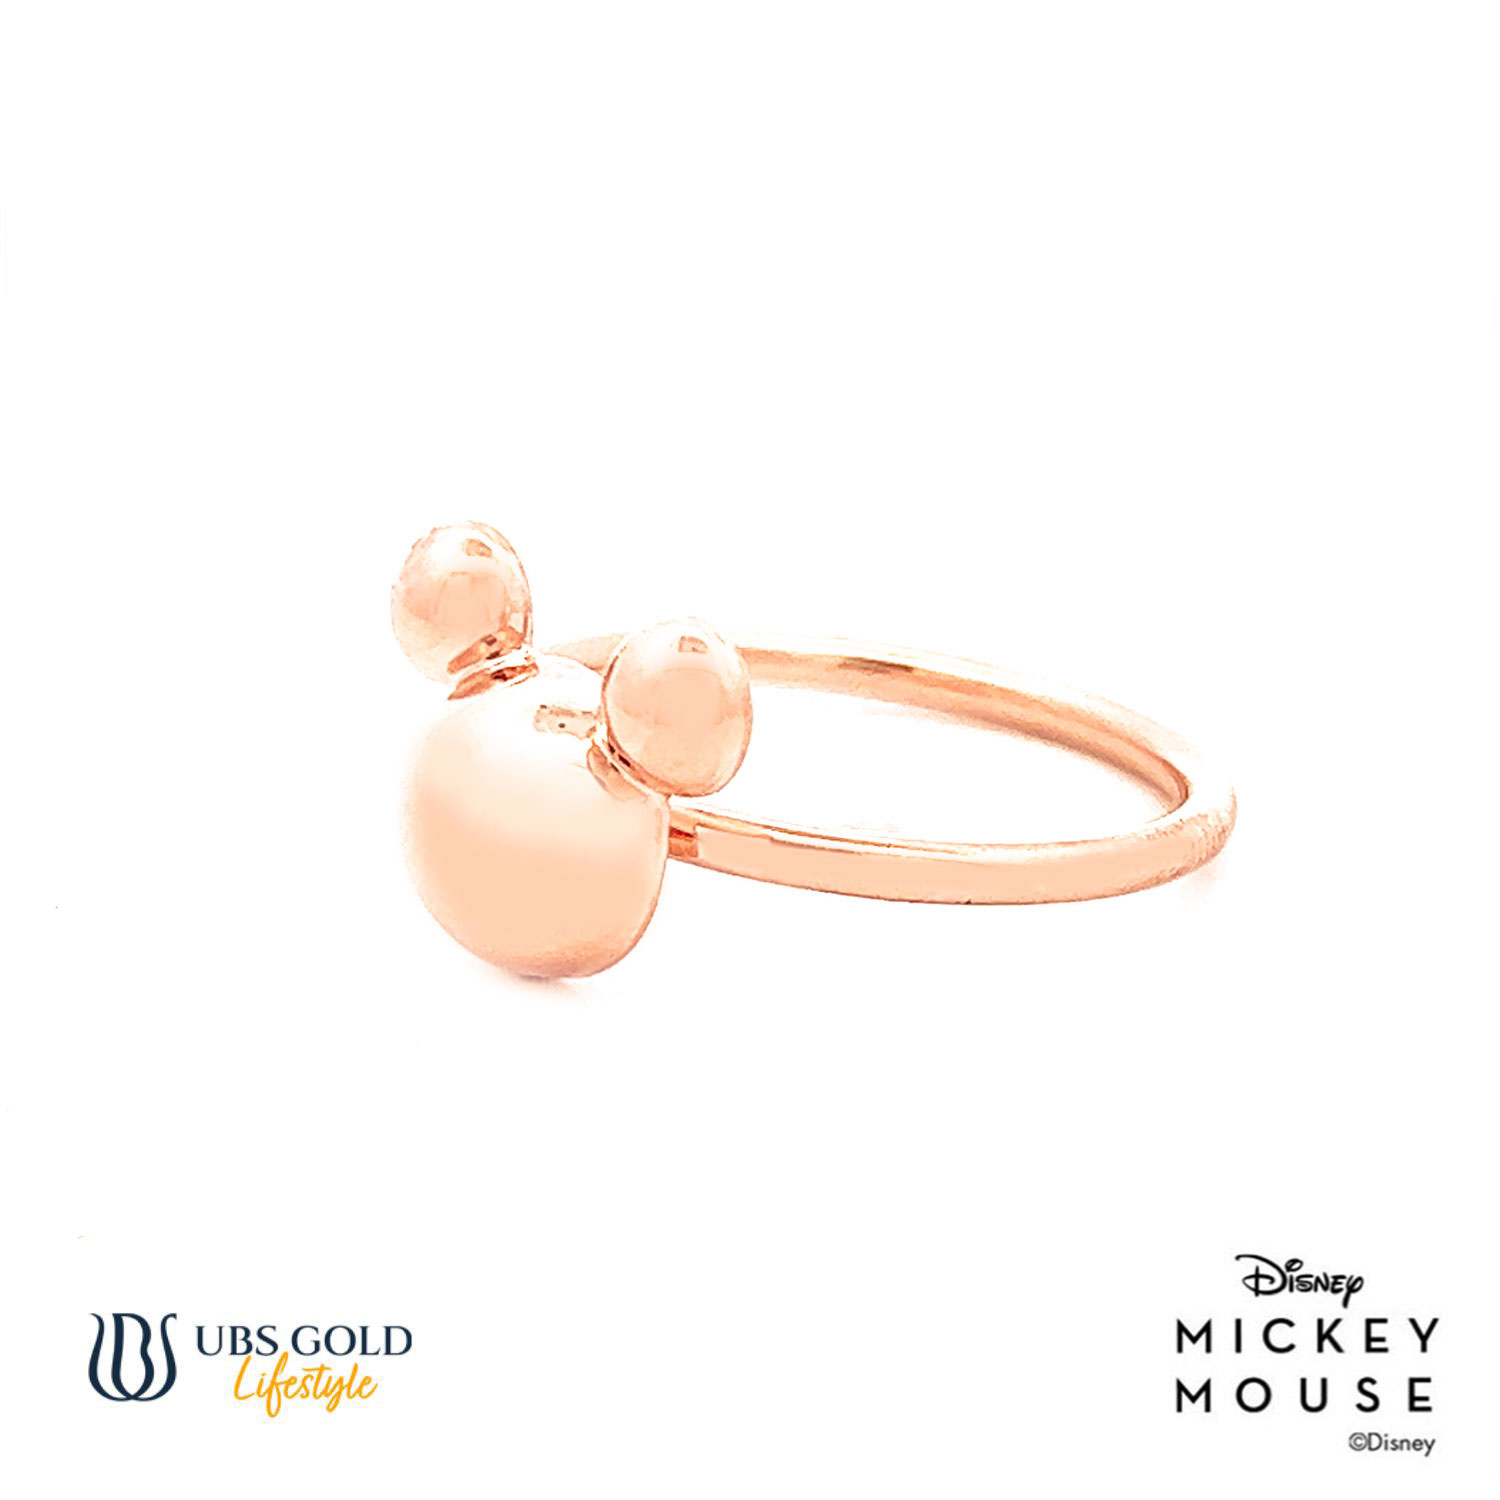 UBS Gold Cincin Emas Disney Mickey Mouse - Acy0021 - 17K